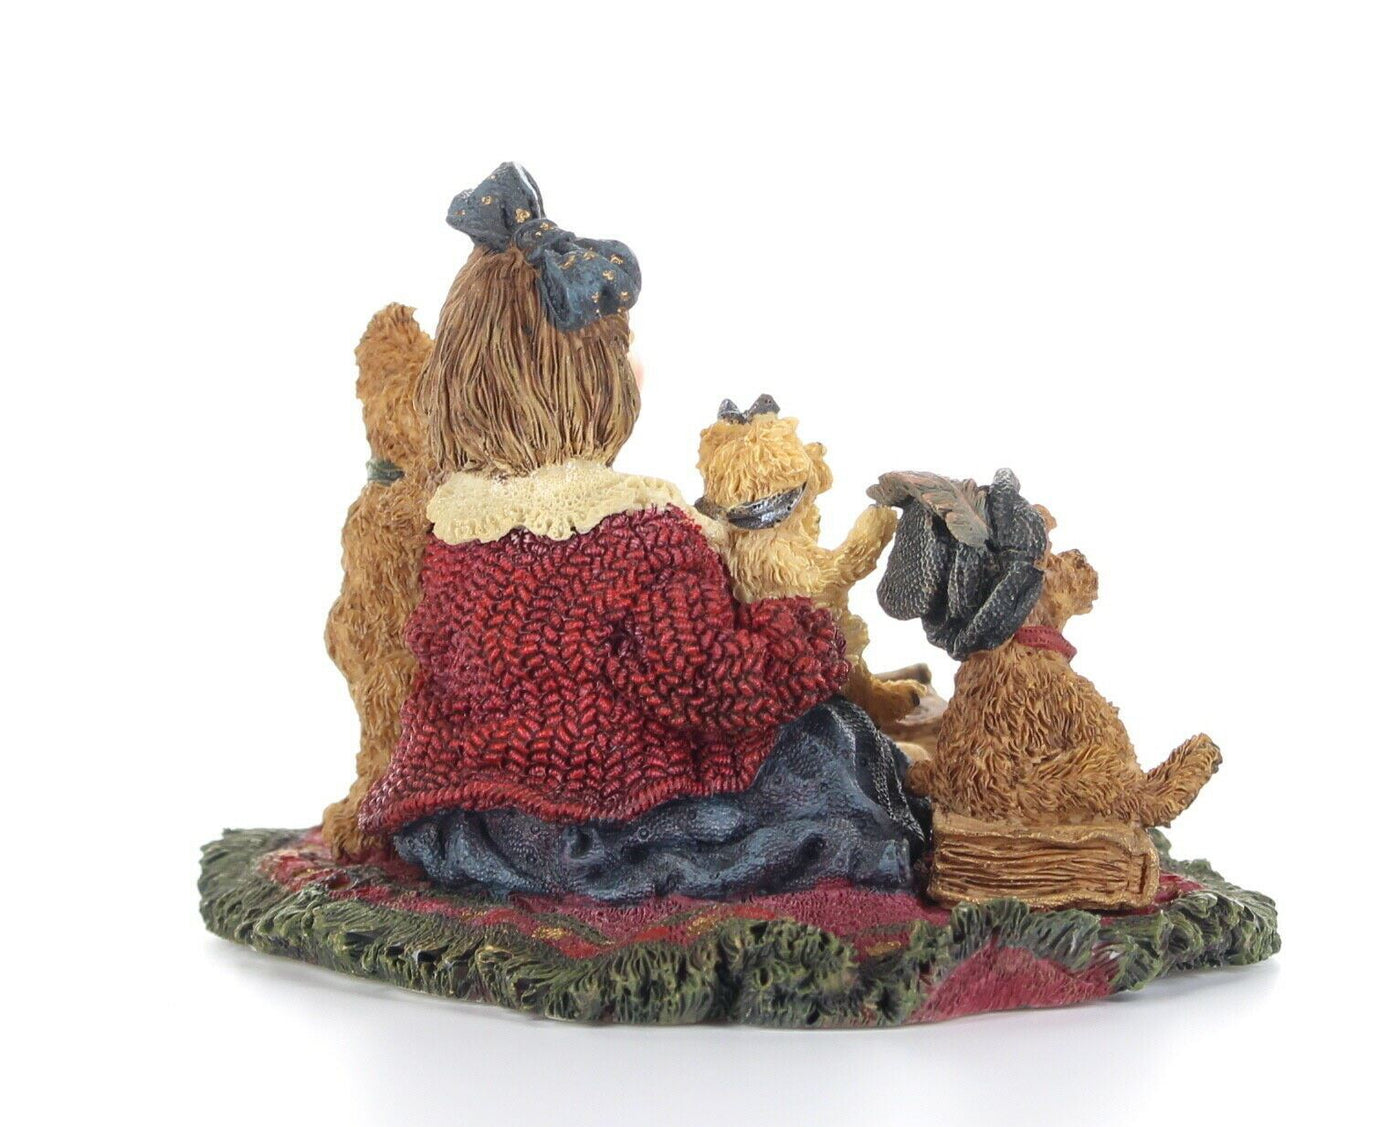 Boyds Bears Dollstone Figurine Kelly & Company The Bear Collector #3542 Box